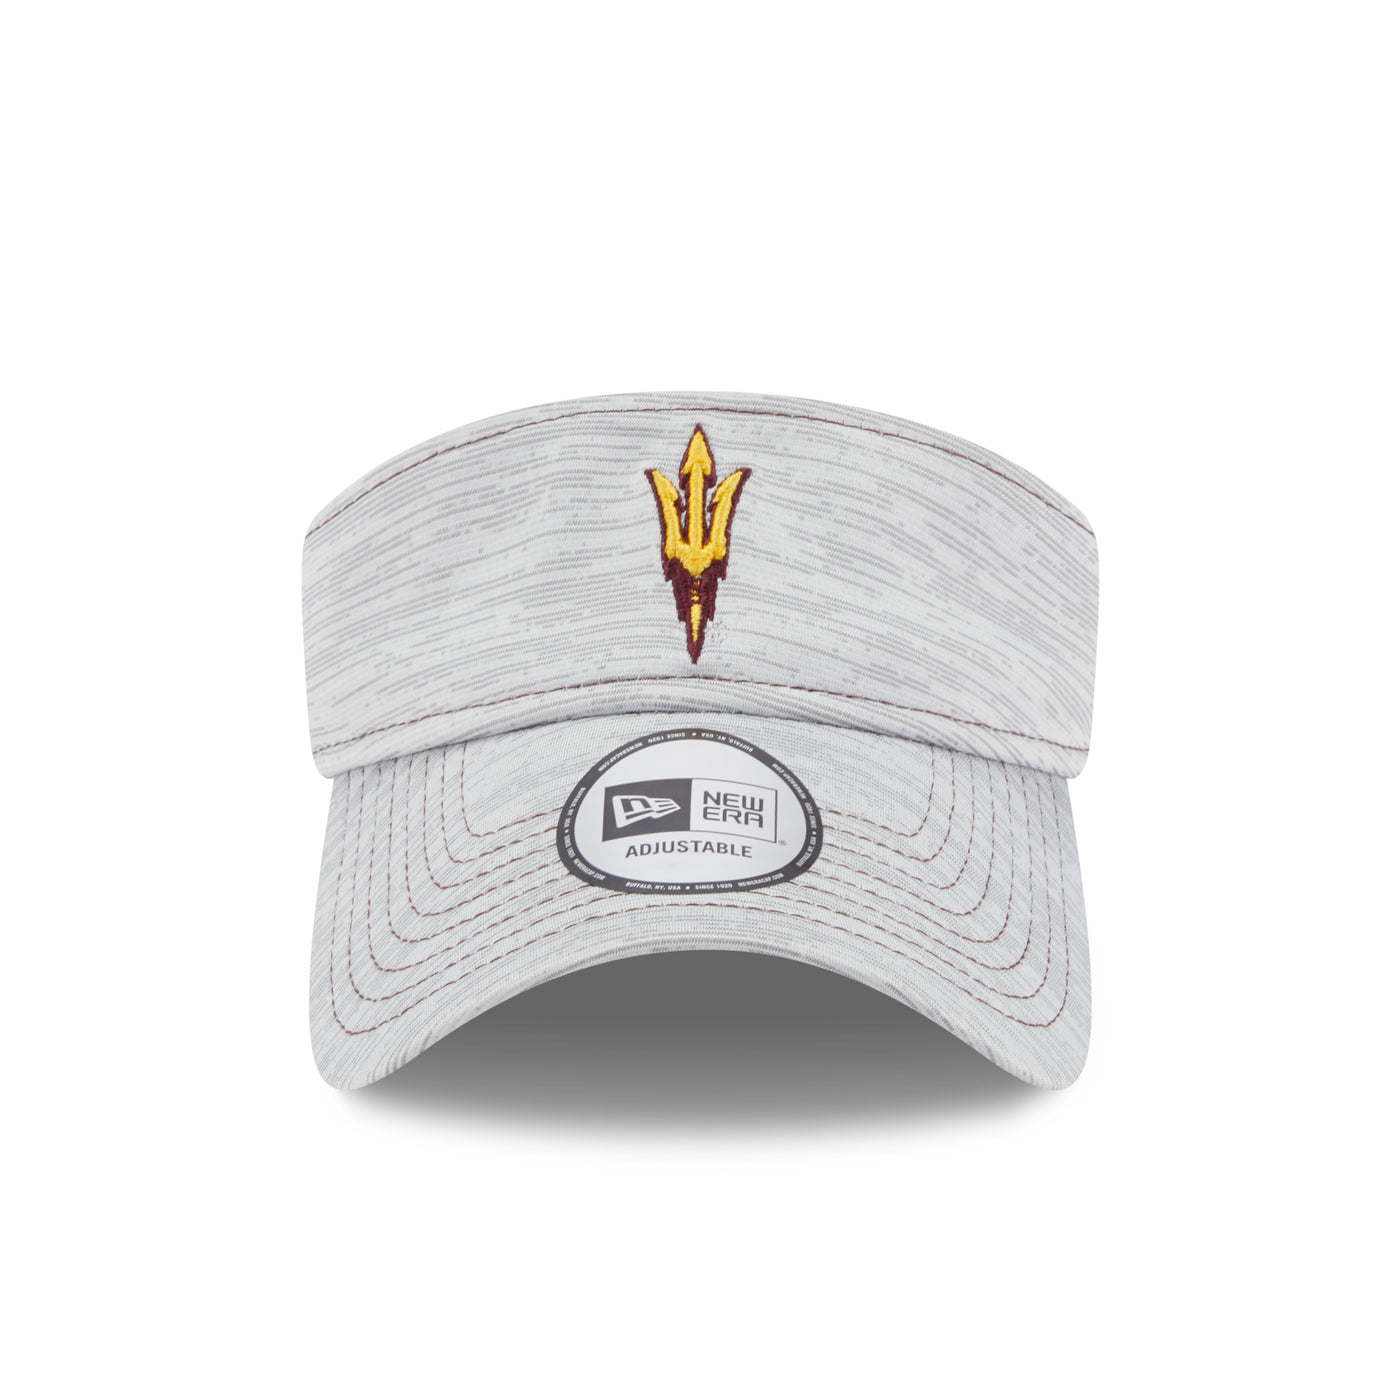 ASU New Era adjustable grey visor with an embroidered pitchfork on the headband